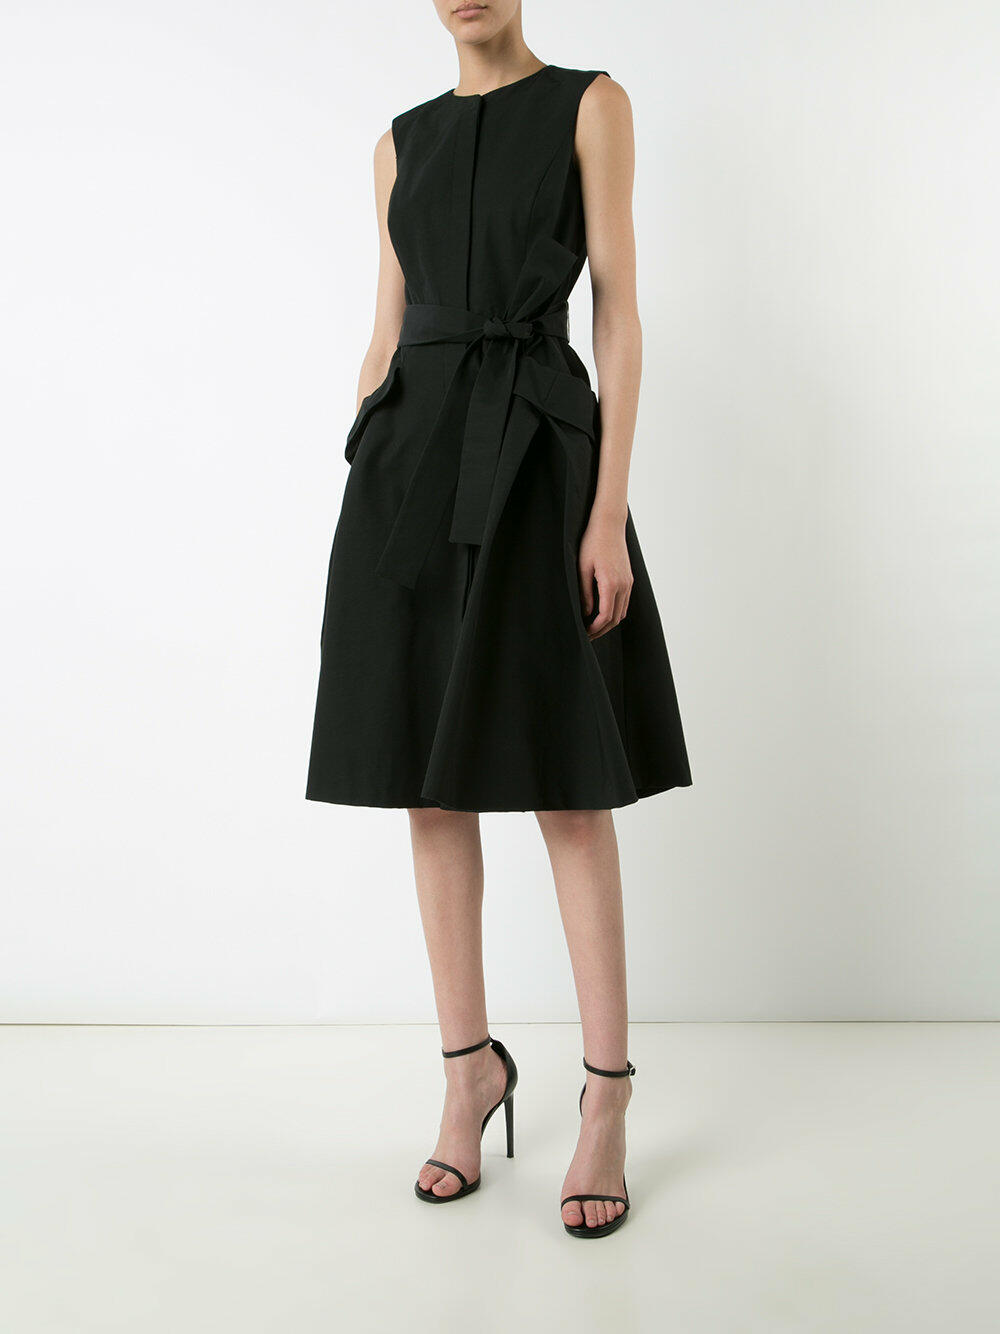 Carolina Herrera - Black Self-Tie Sleeveless Dress